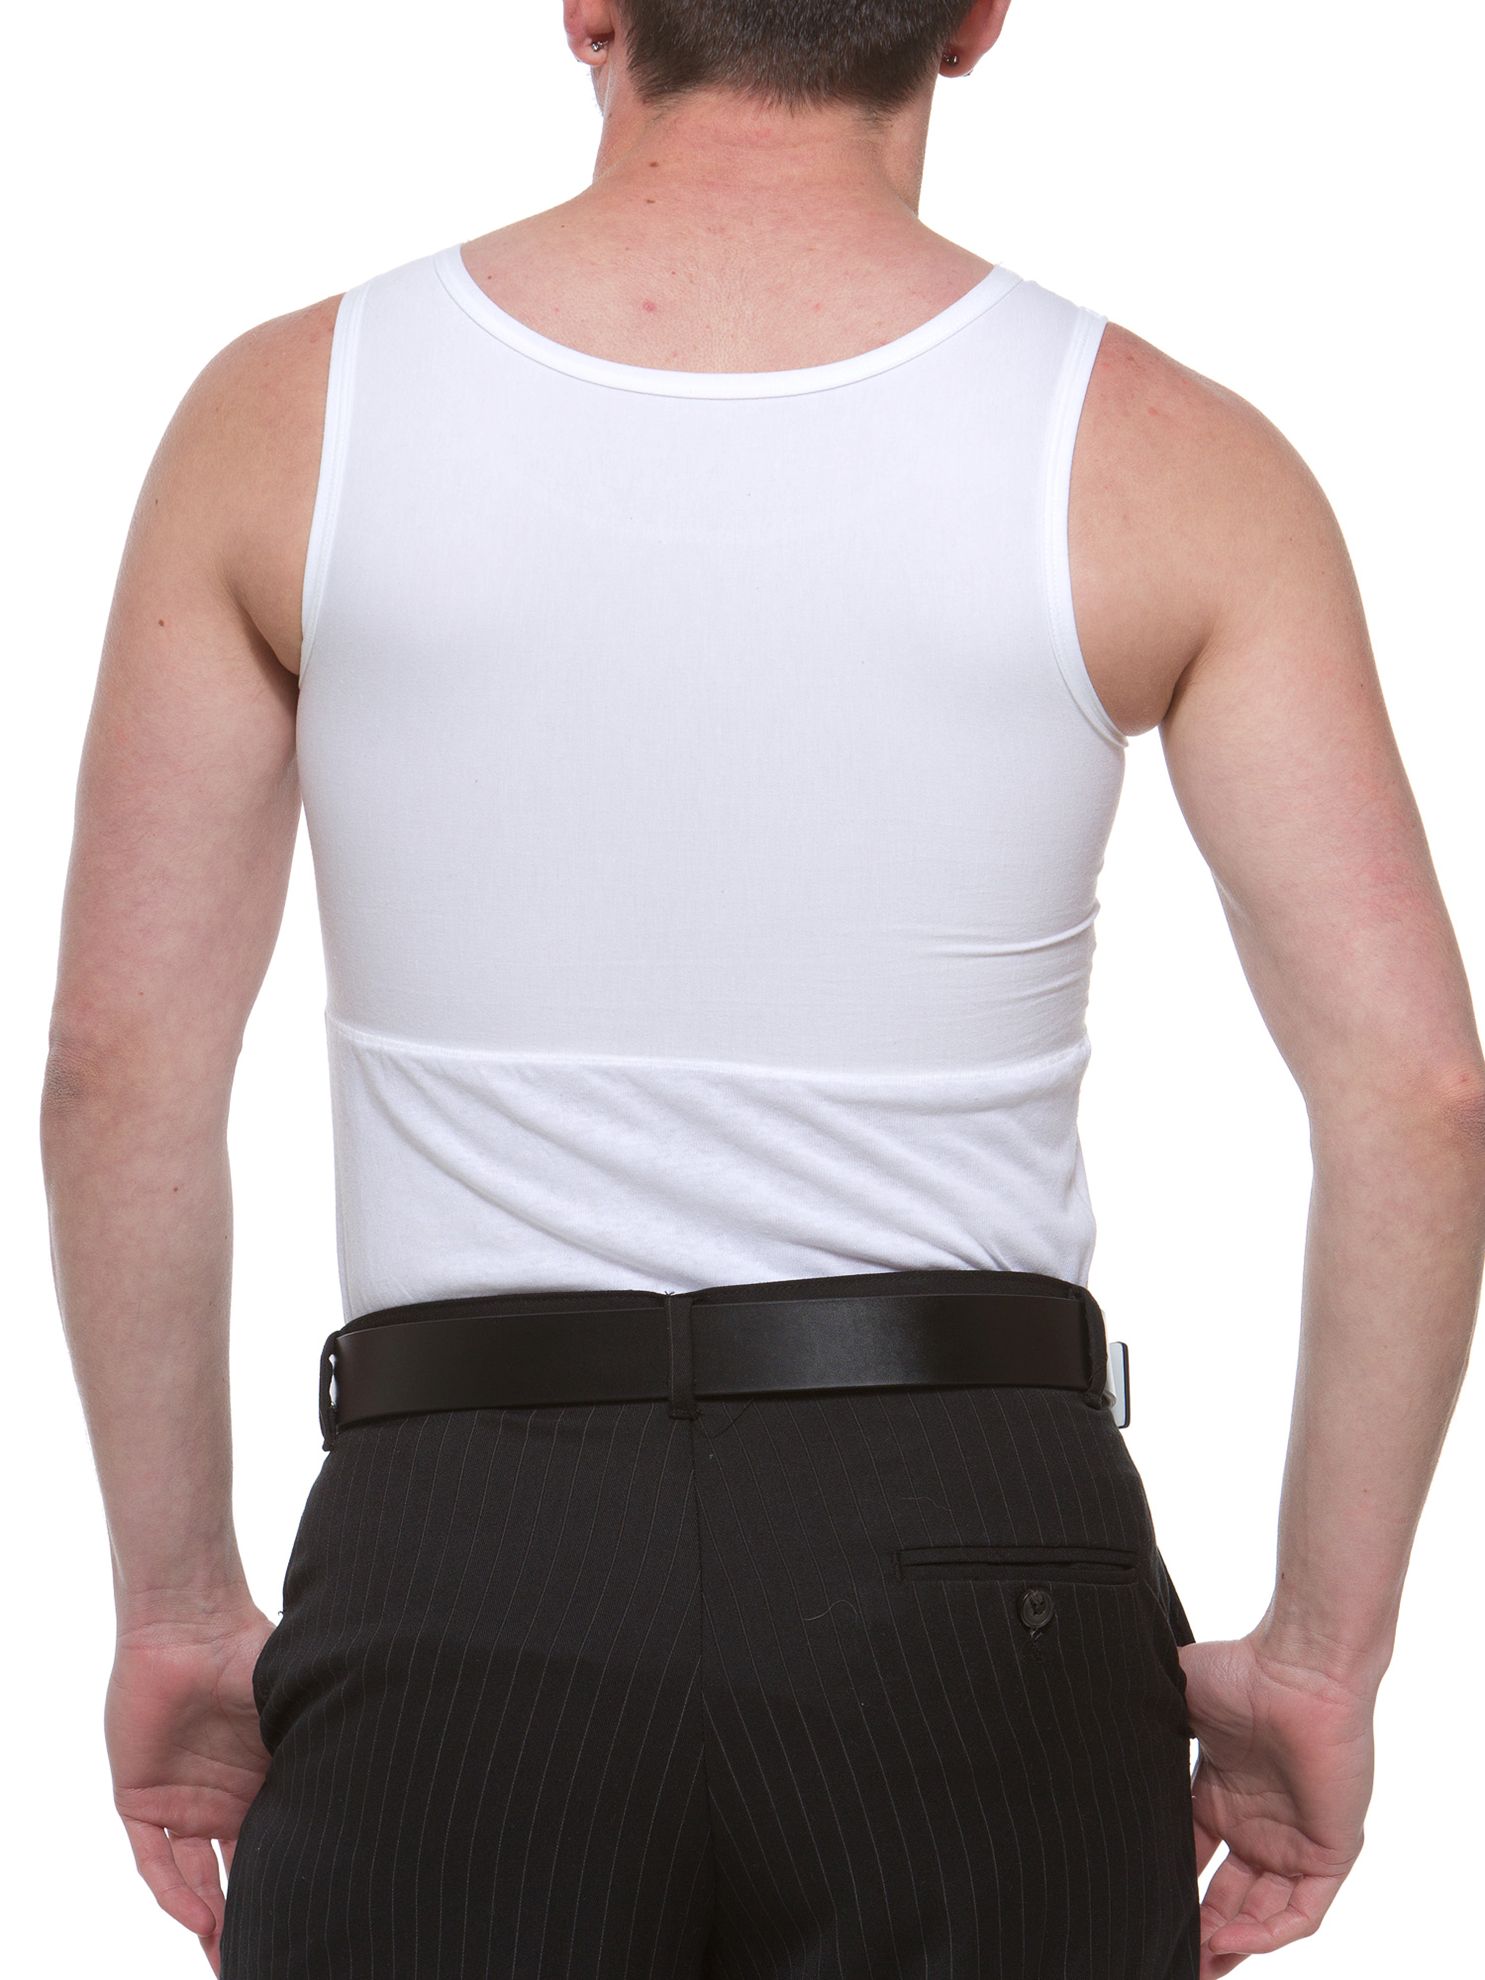 Buy Underworks Mens Extreme Gynecomastia Chest Binder Girdle T-Shirt 2X  White at